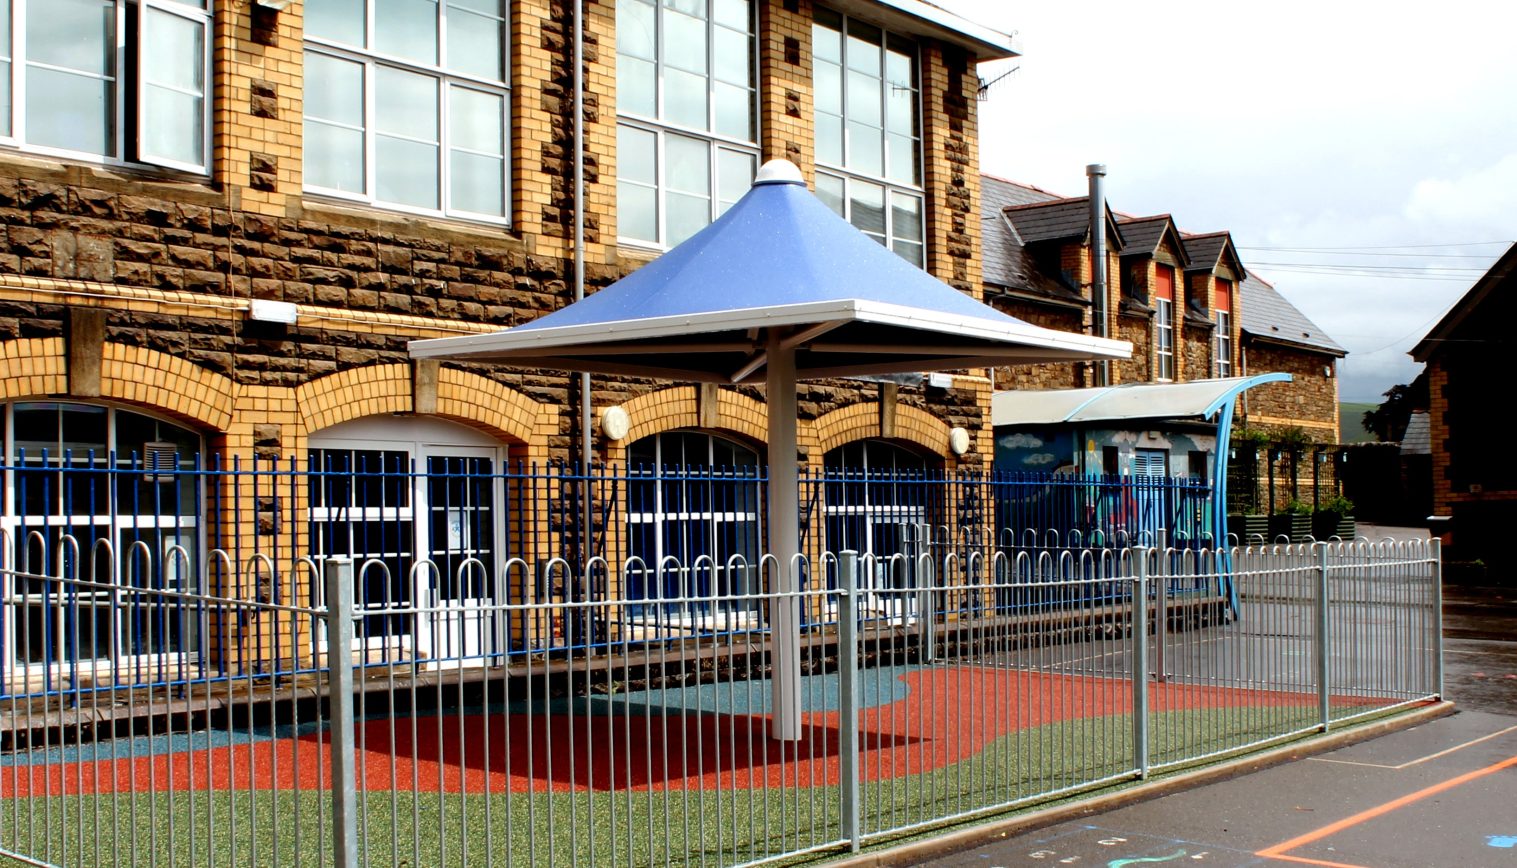 Plasnewydd Primary School – Bespoke Umbrella